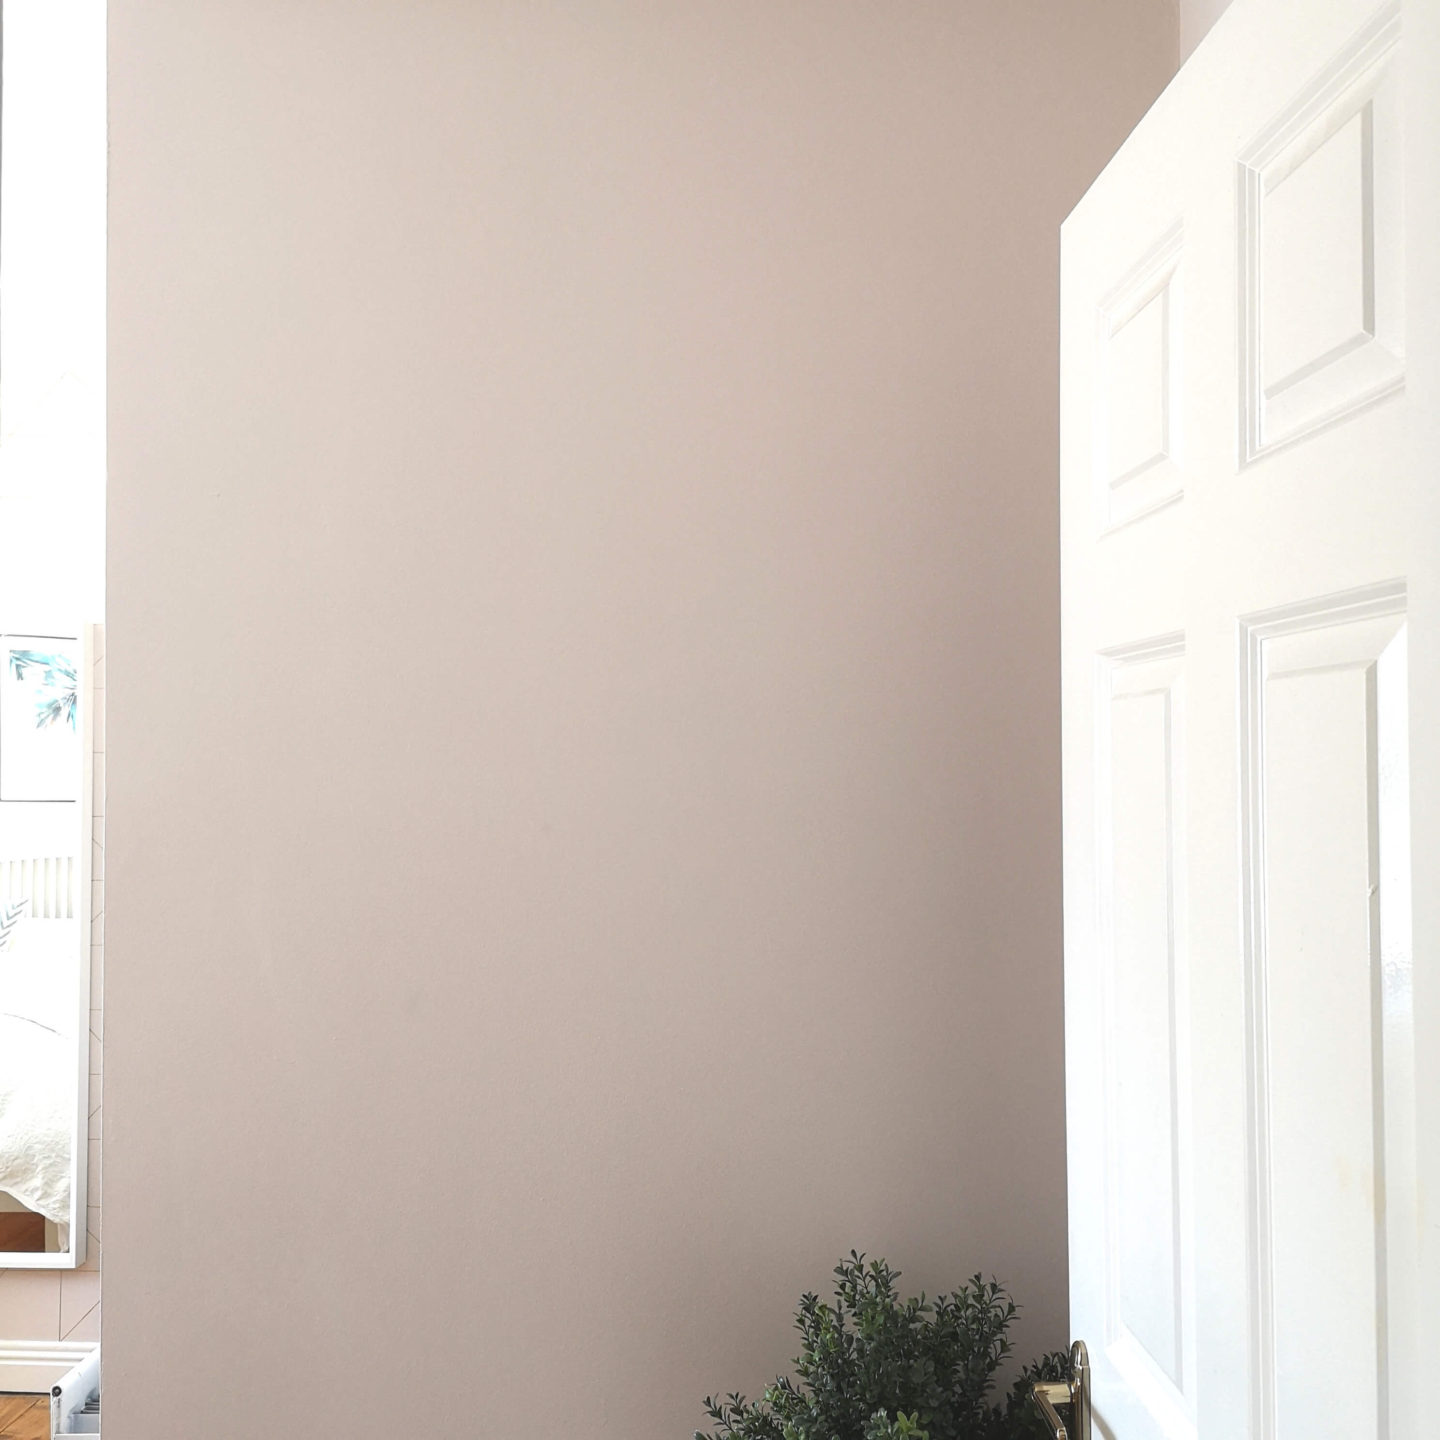 Blank pale pink wall just inside a bedroom door.